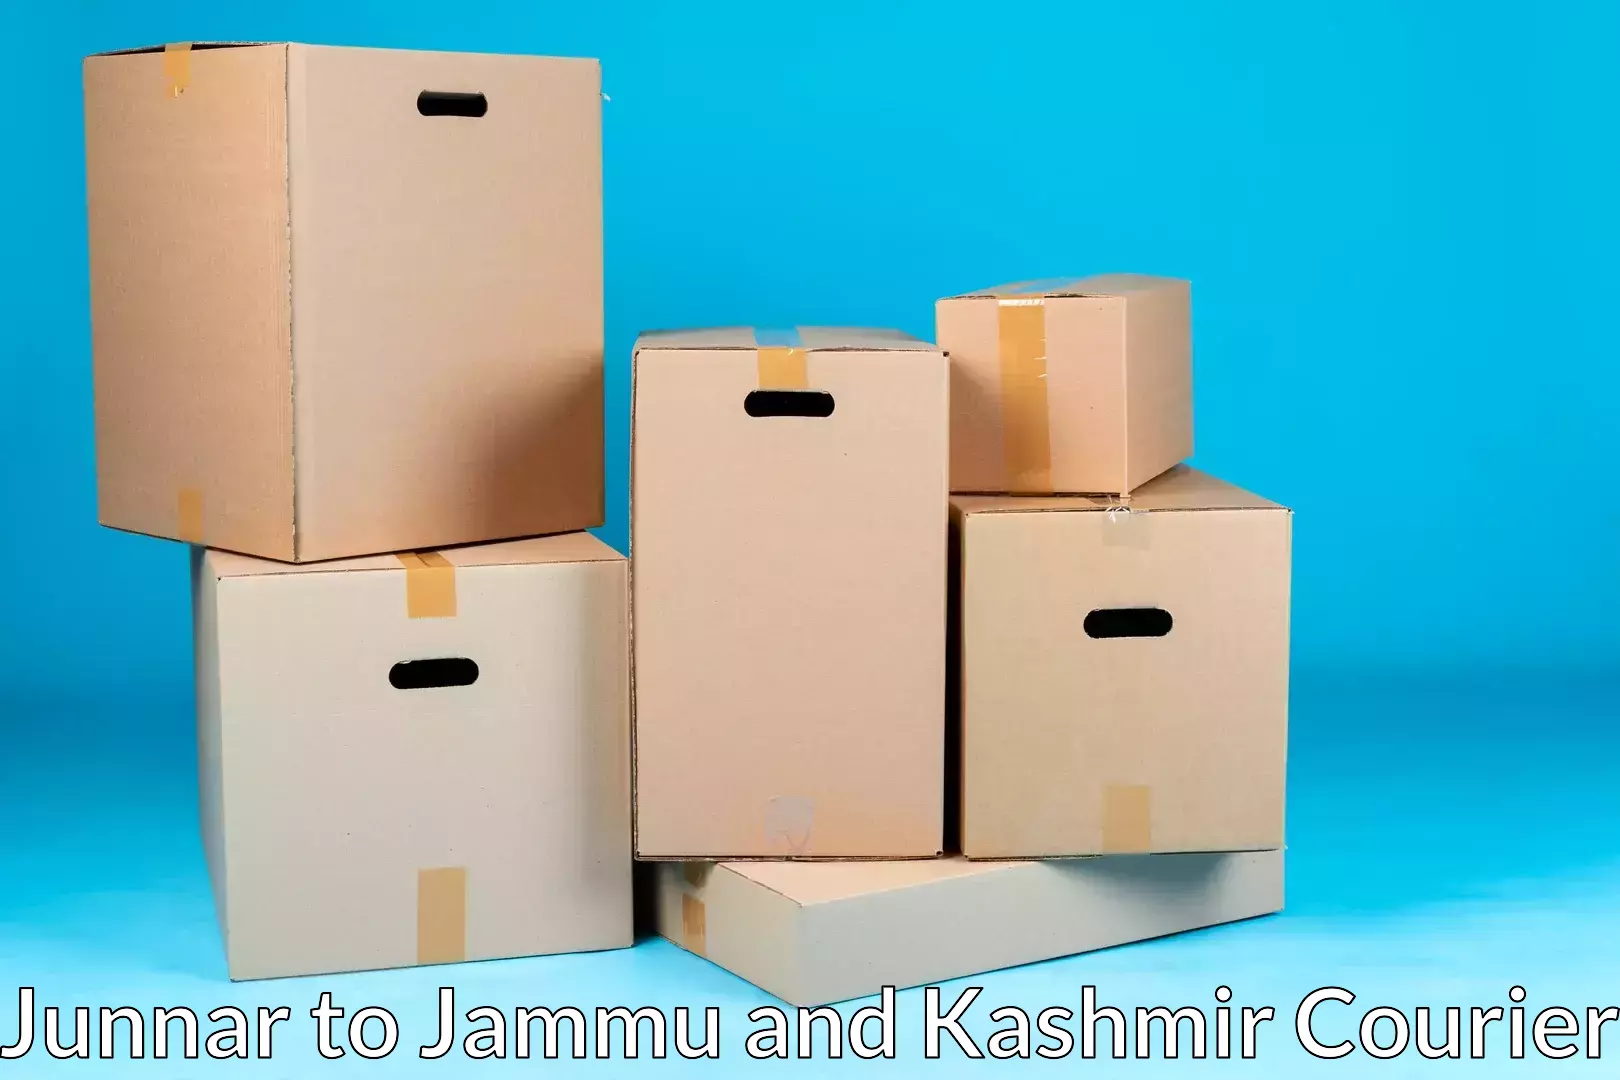 Moving and packing experts Junnar to Srinagar Kashmir